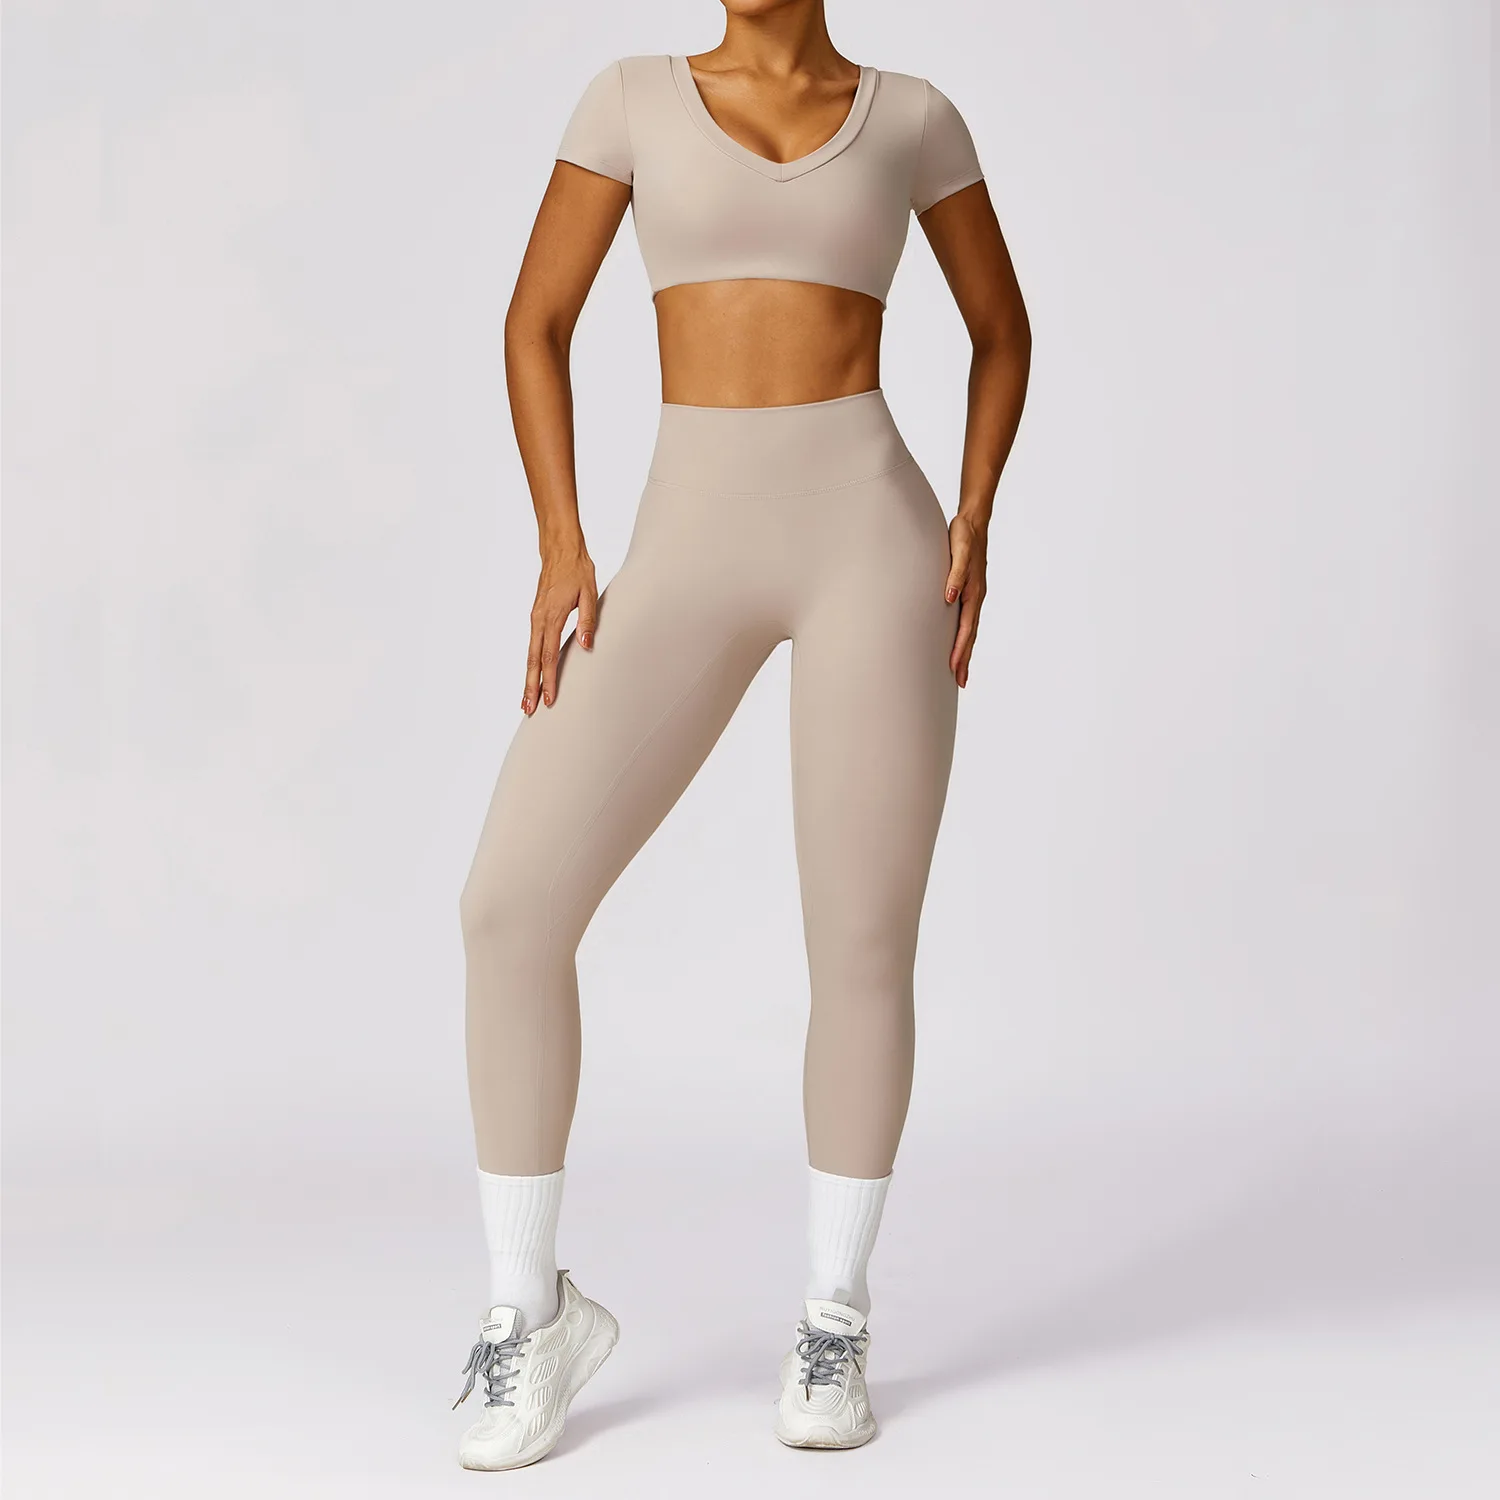 Custom Yoga Legging Set Active Sport wear Fitness Gym Sportswear Women 2 Piece Crop Top And Leggings Set